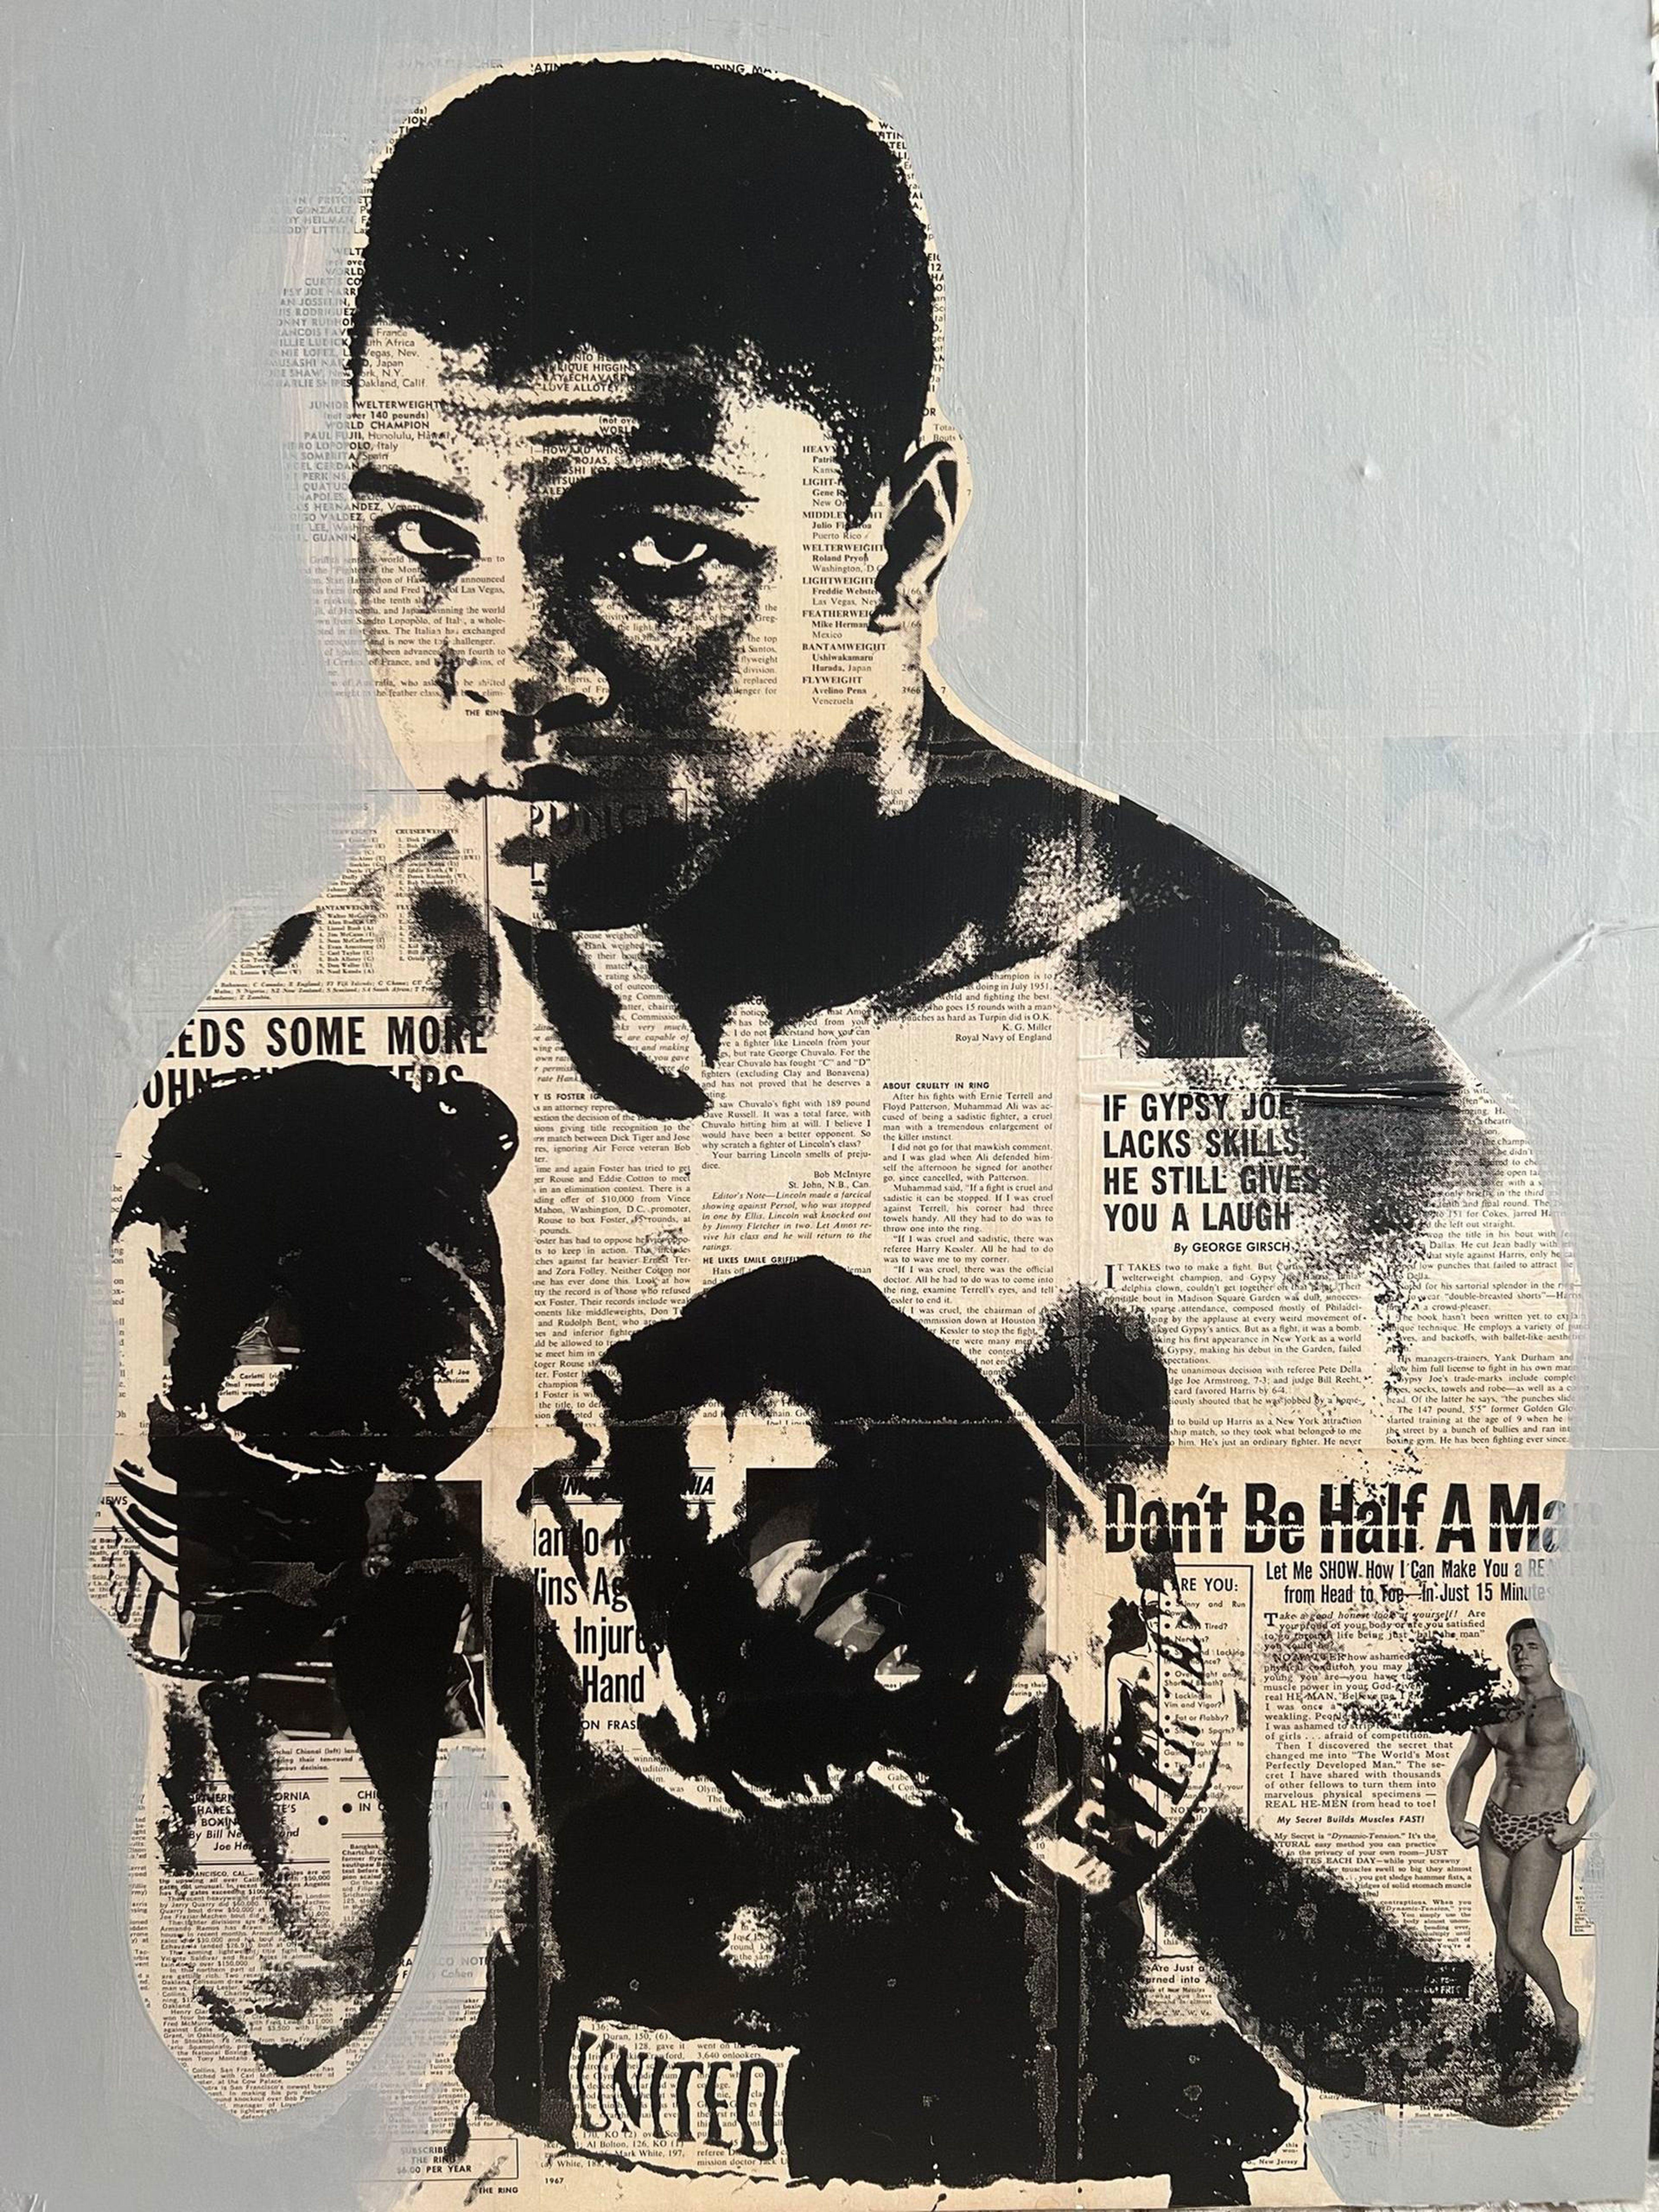 The Greatest - Muhammad Ali, Mixed Media on Wood Panel - Mixed Media Art by Dane Shue